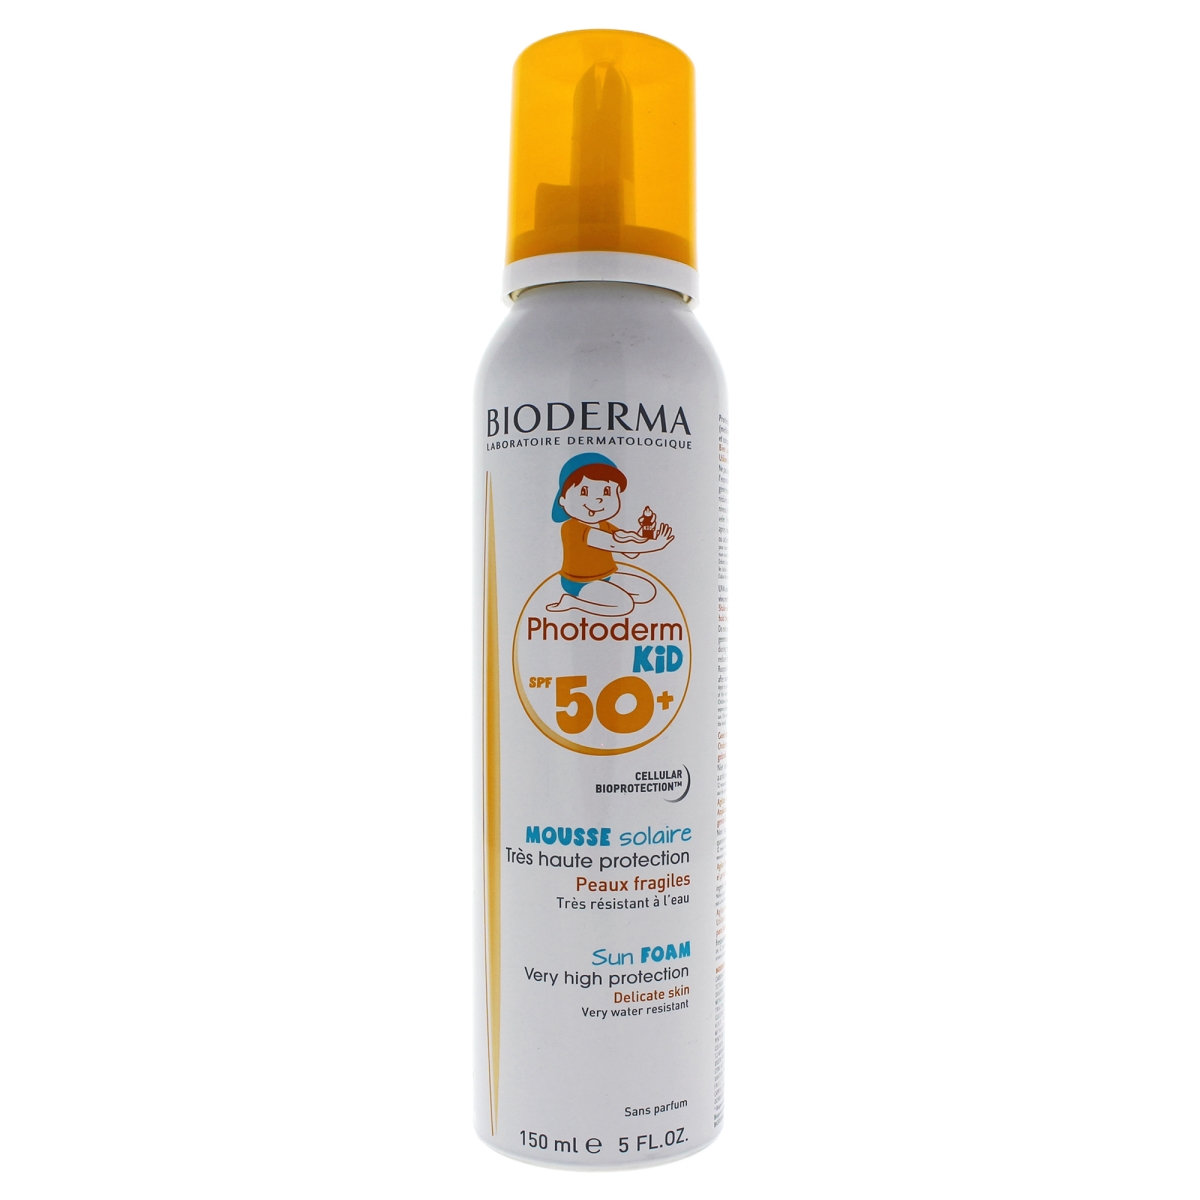 I0088731 Photoderm Kid Sun Foam Spf 50 Sunscreen For Unisex - 5 Oz